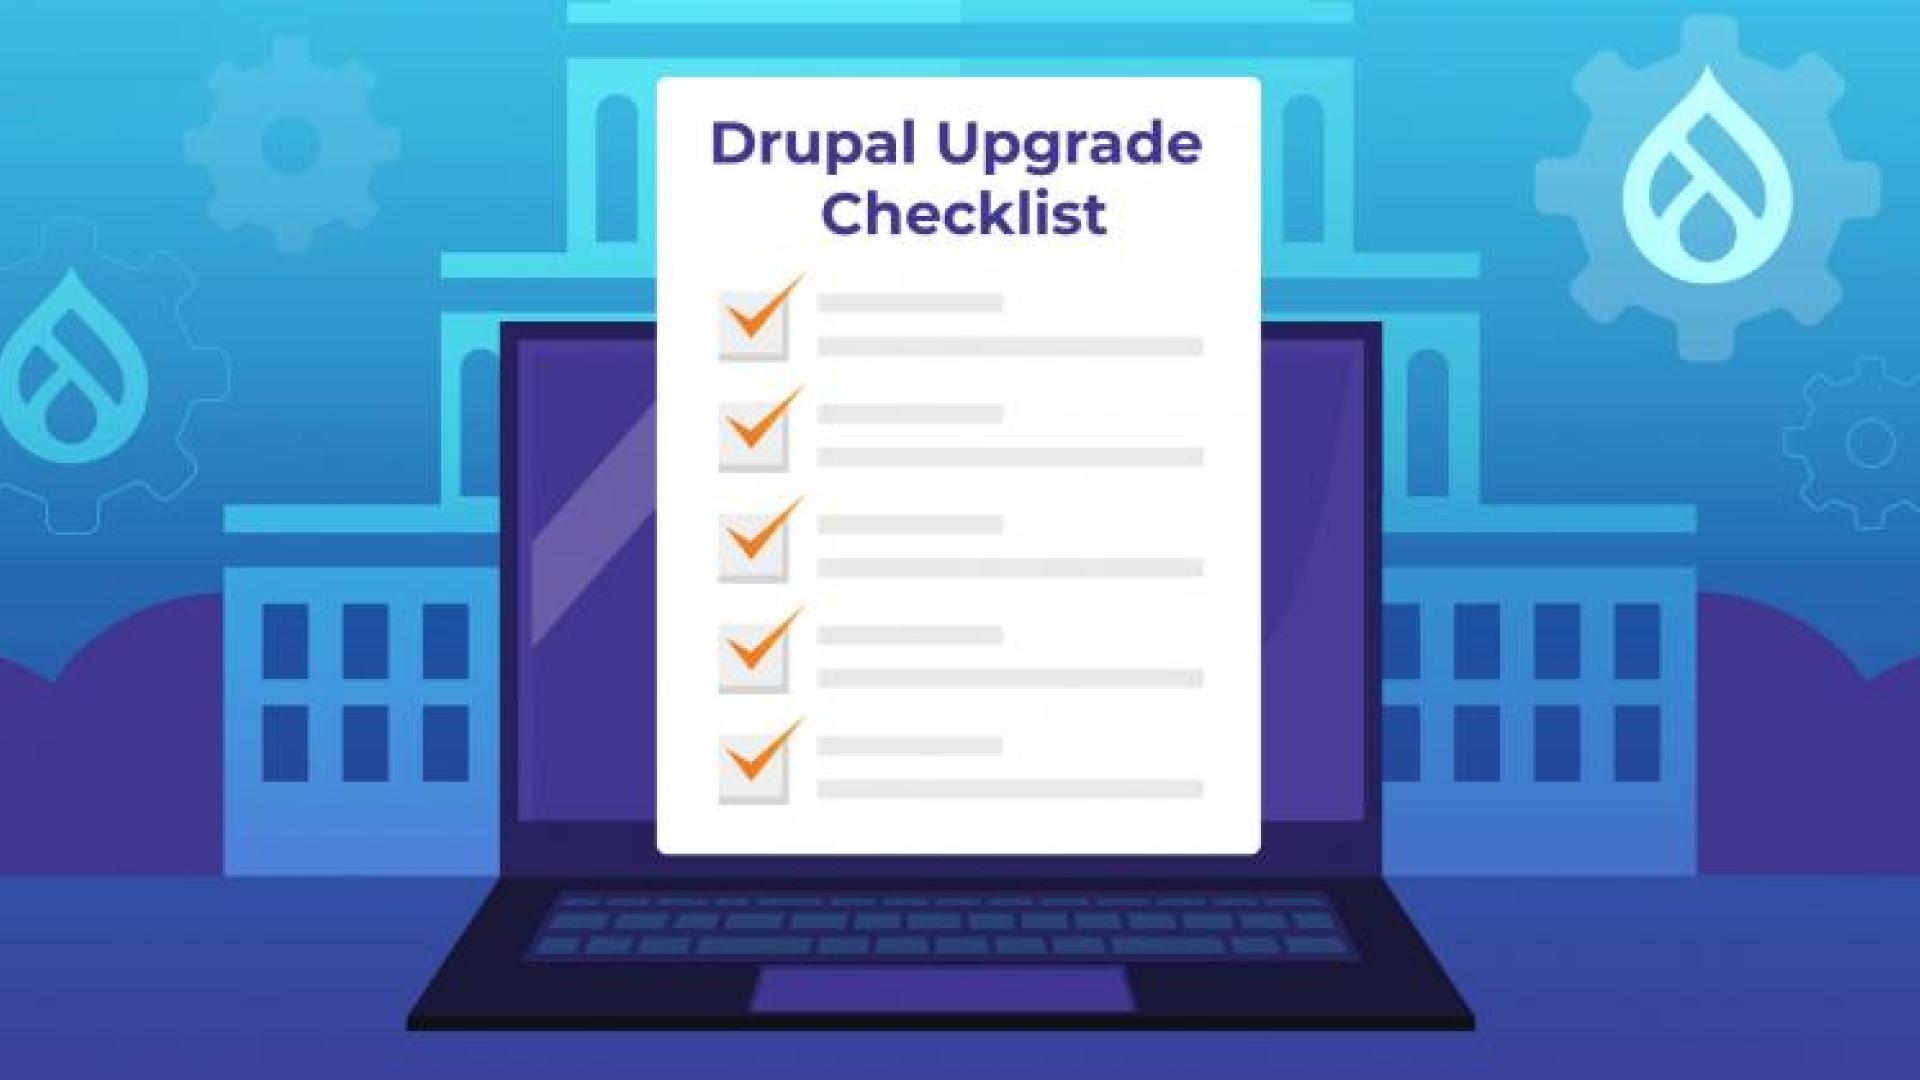 Drupal Upgrade Checklist